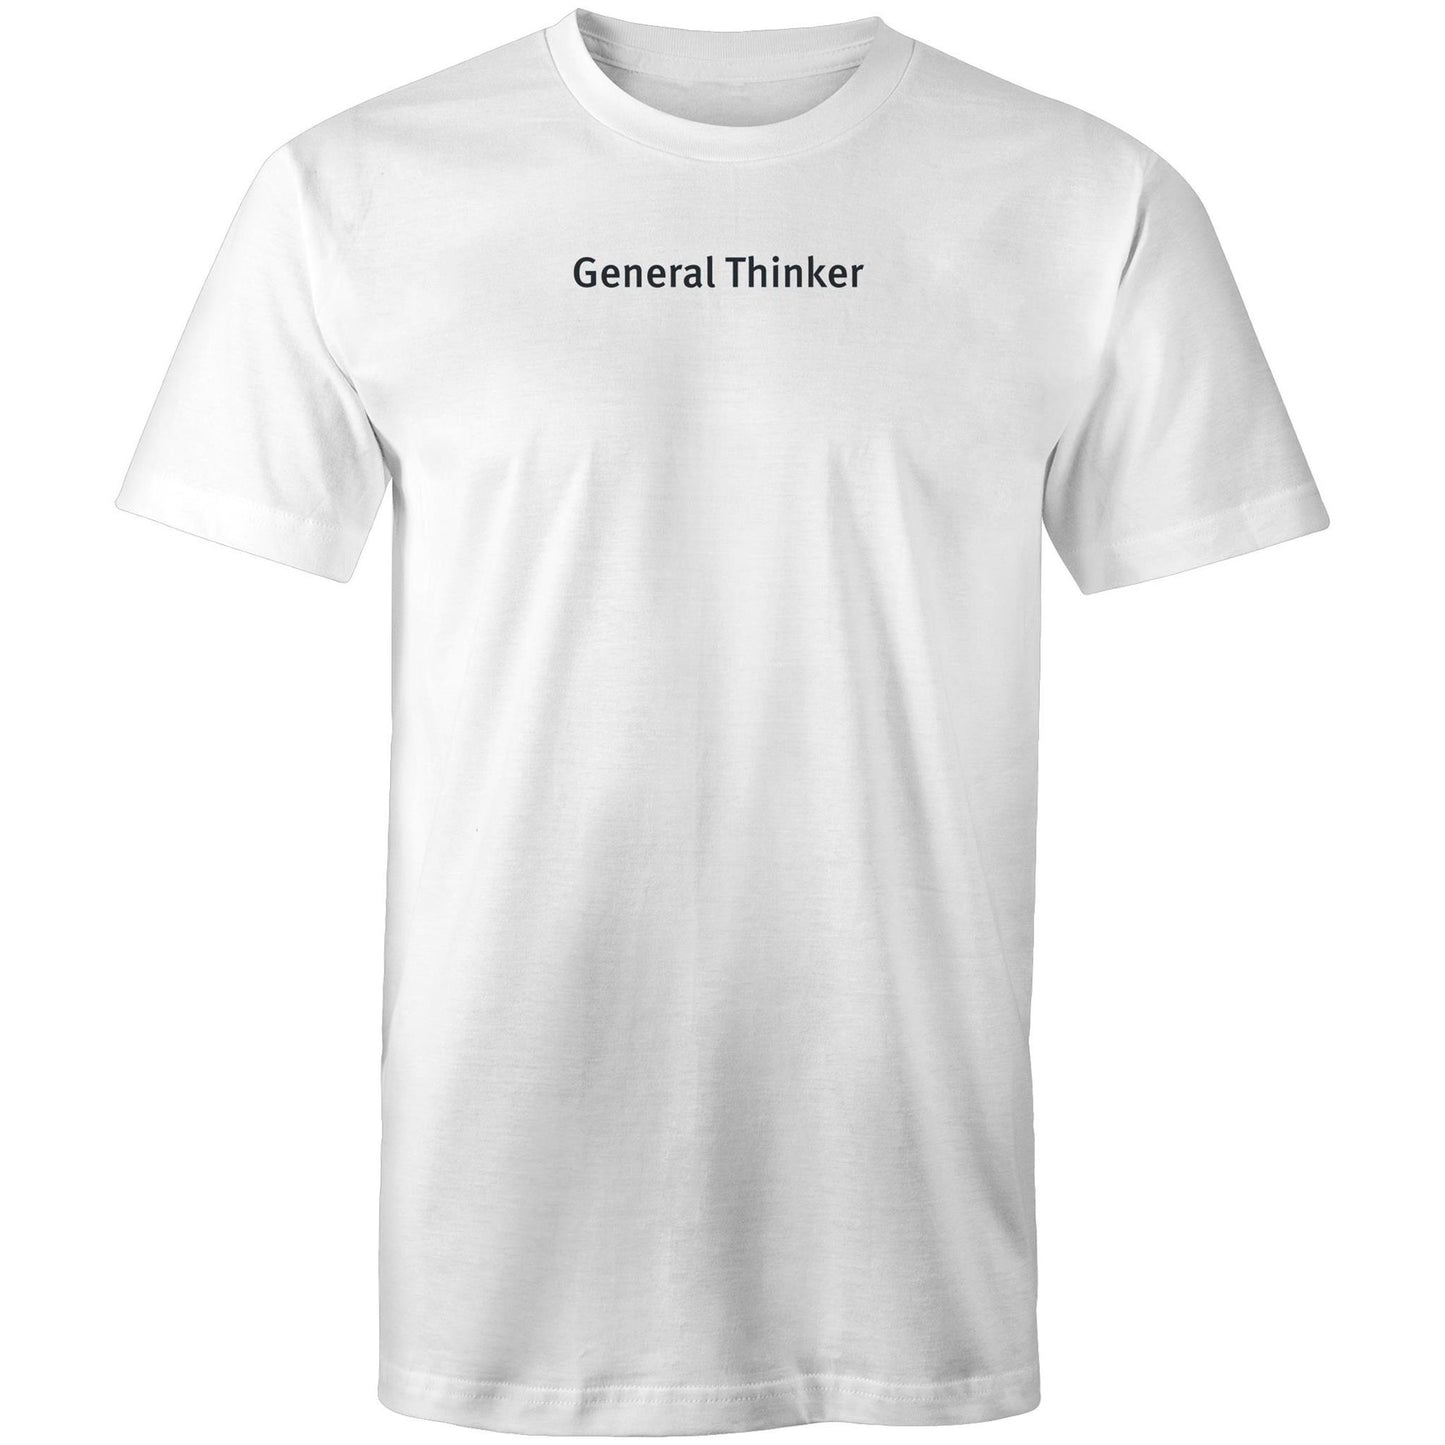 General Thinker T Shirts for Men (Unisex)